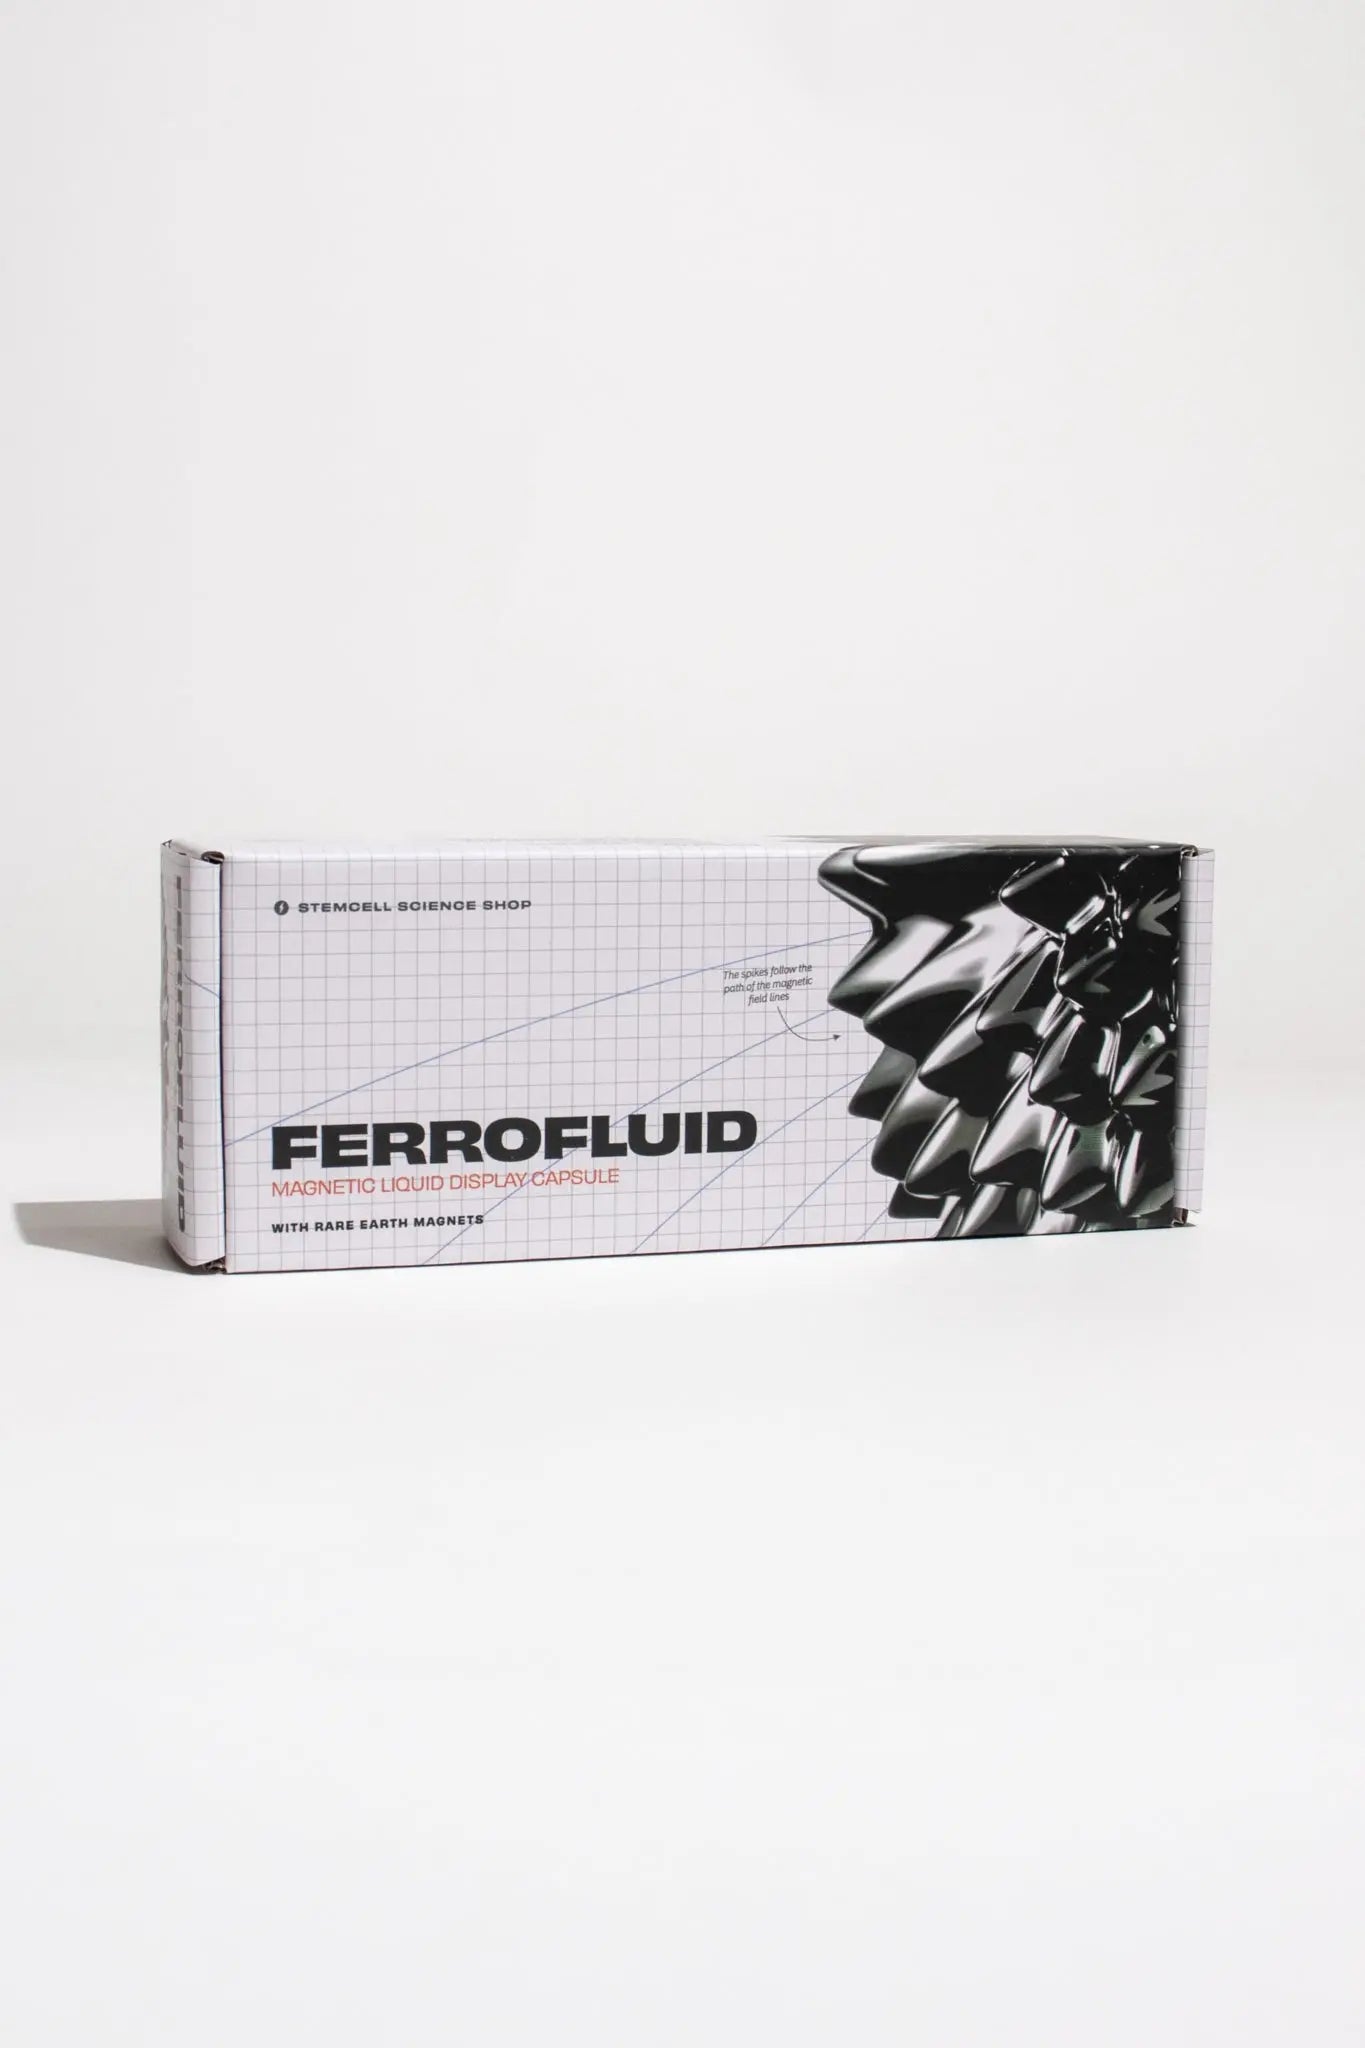 Ferrofluid Display Cylinder - Stemcell Science Shop